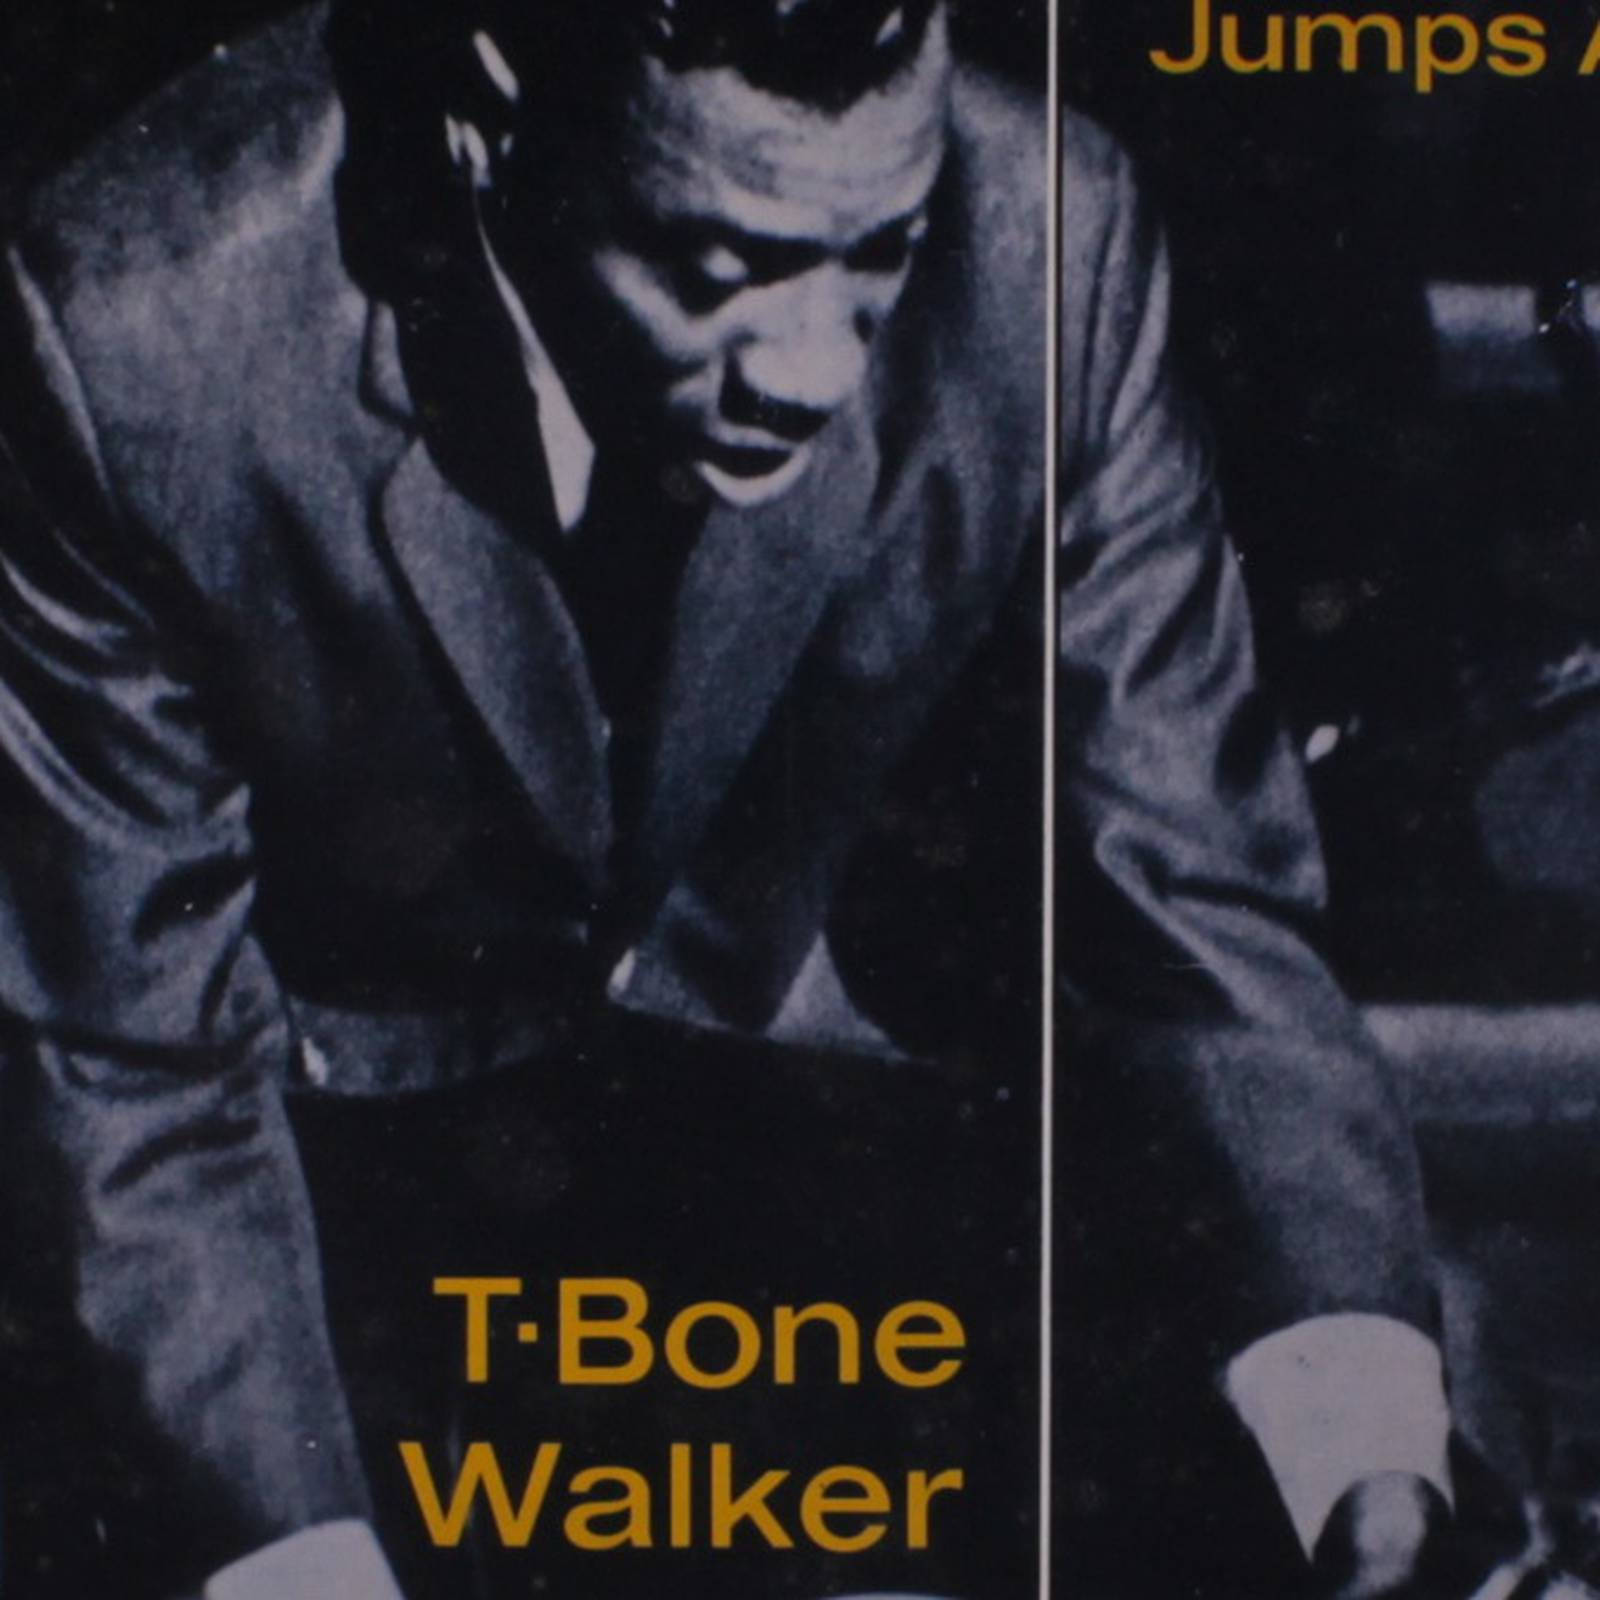 T-bone Walker Jumps Poster Wallpaper